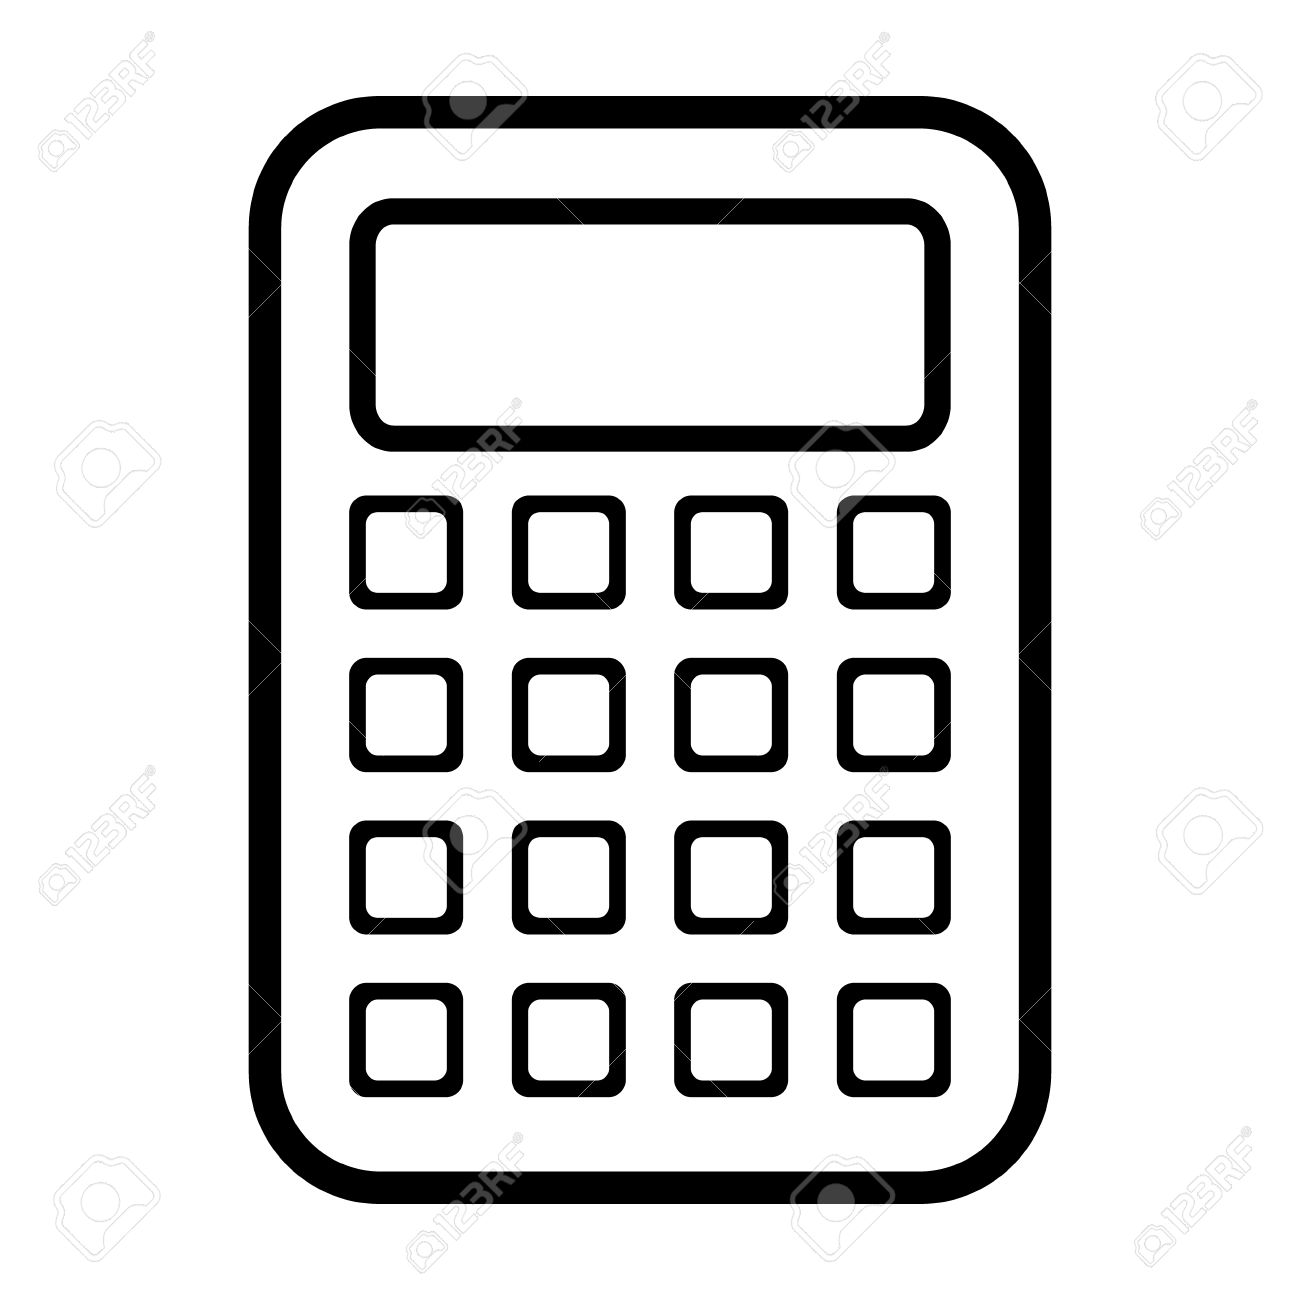 calculator clipart outline